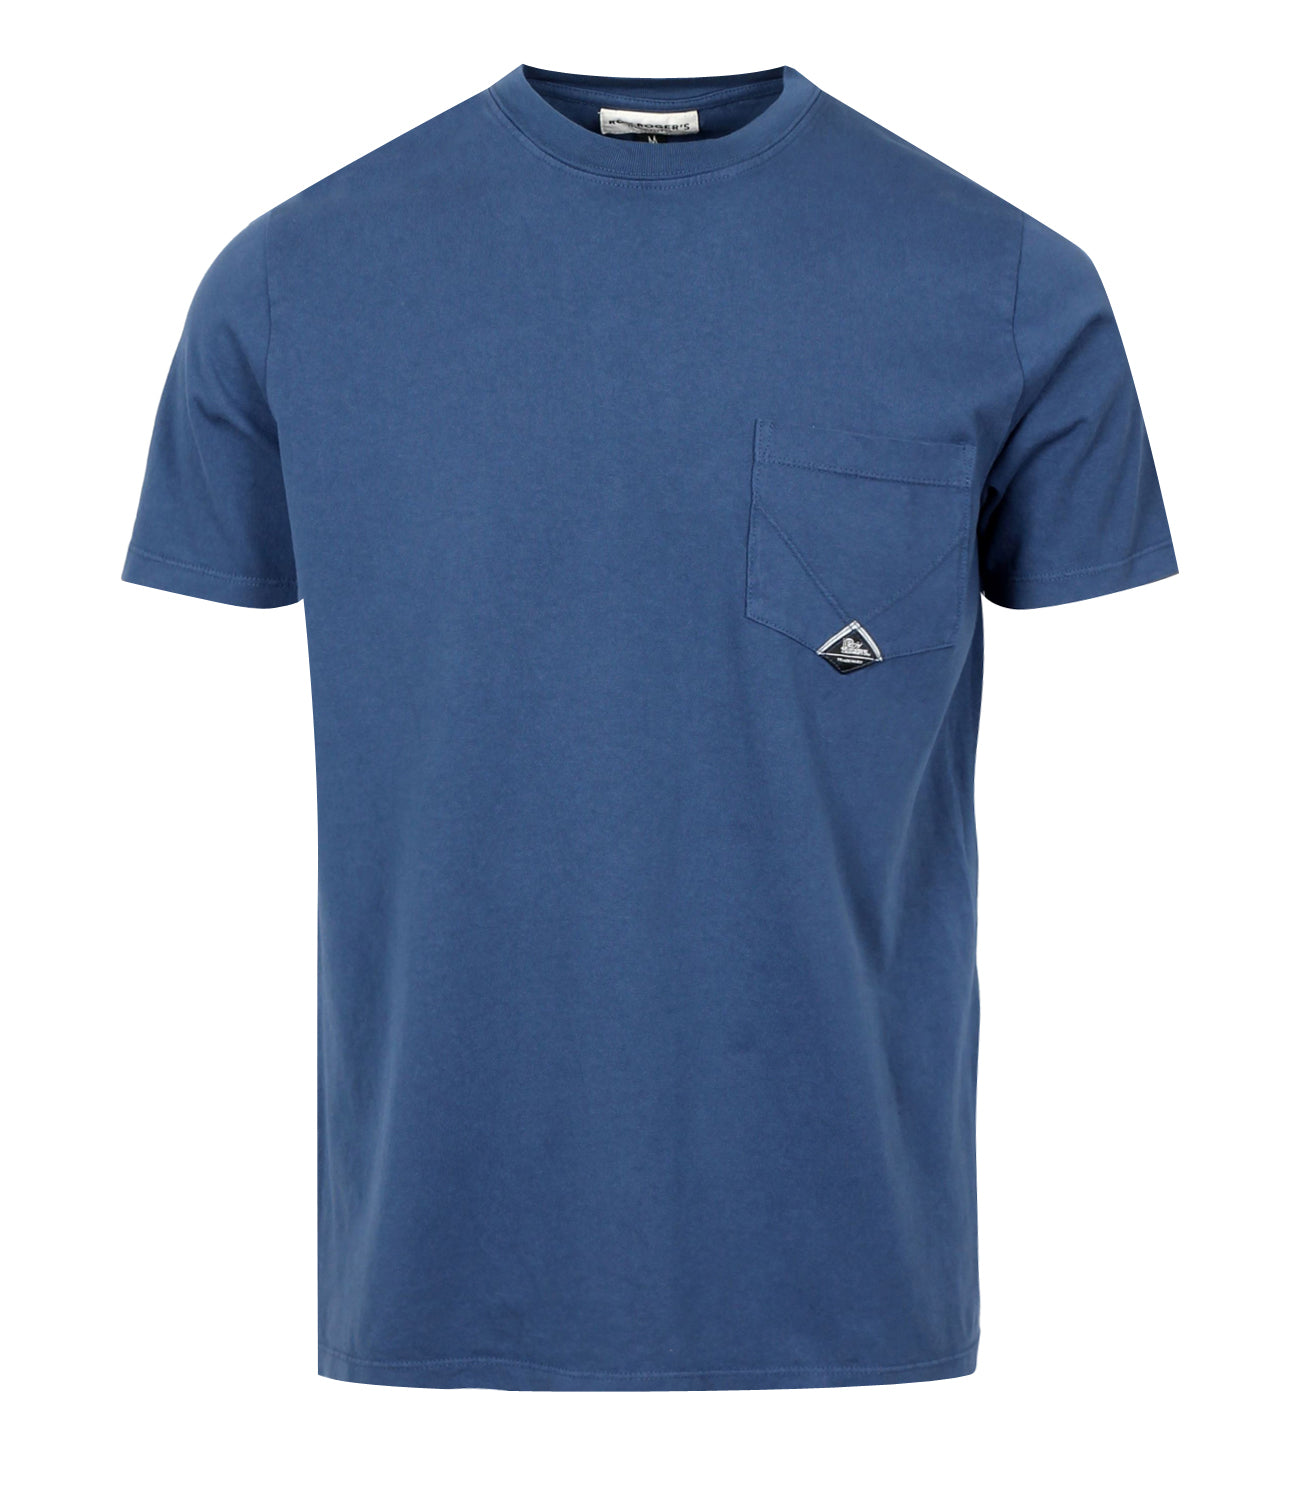 Roy Roger's | T-Shirt Pocket Indaco